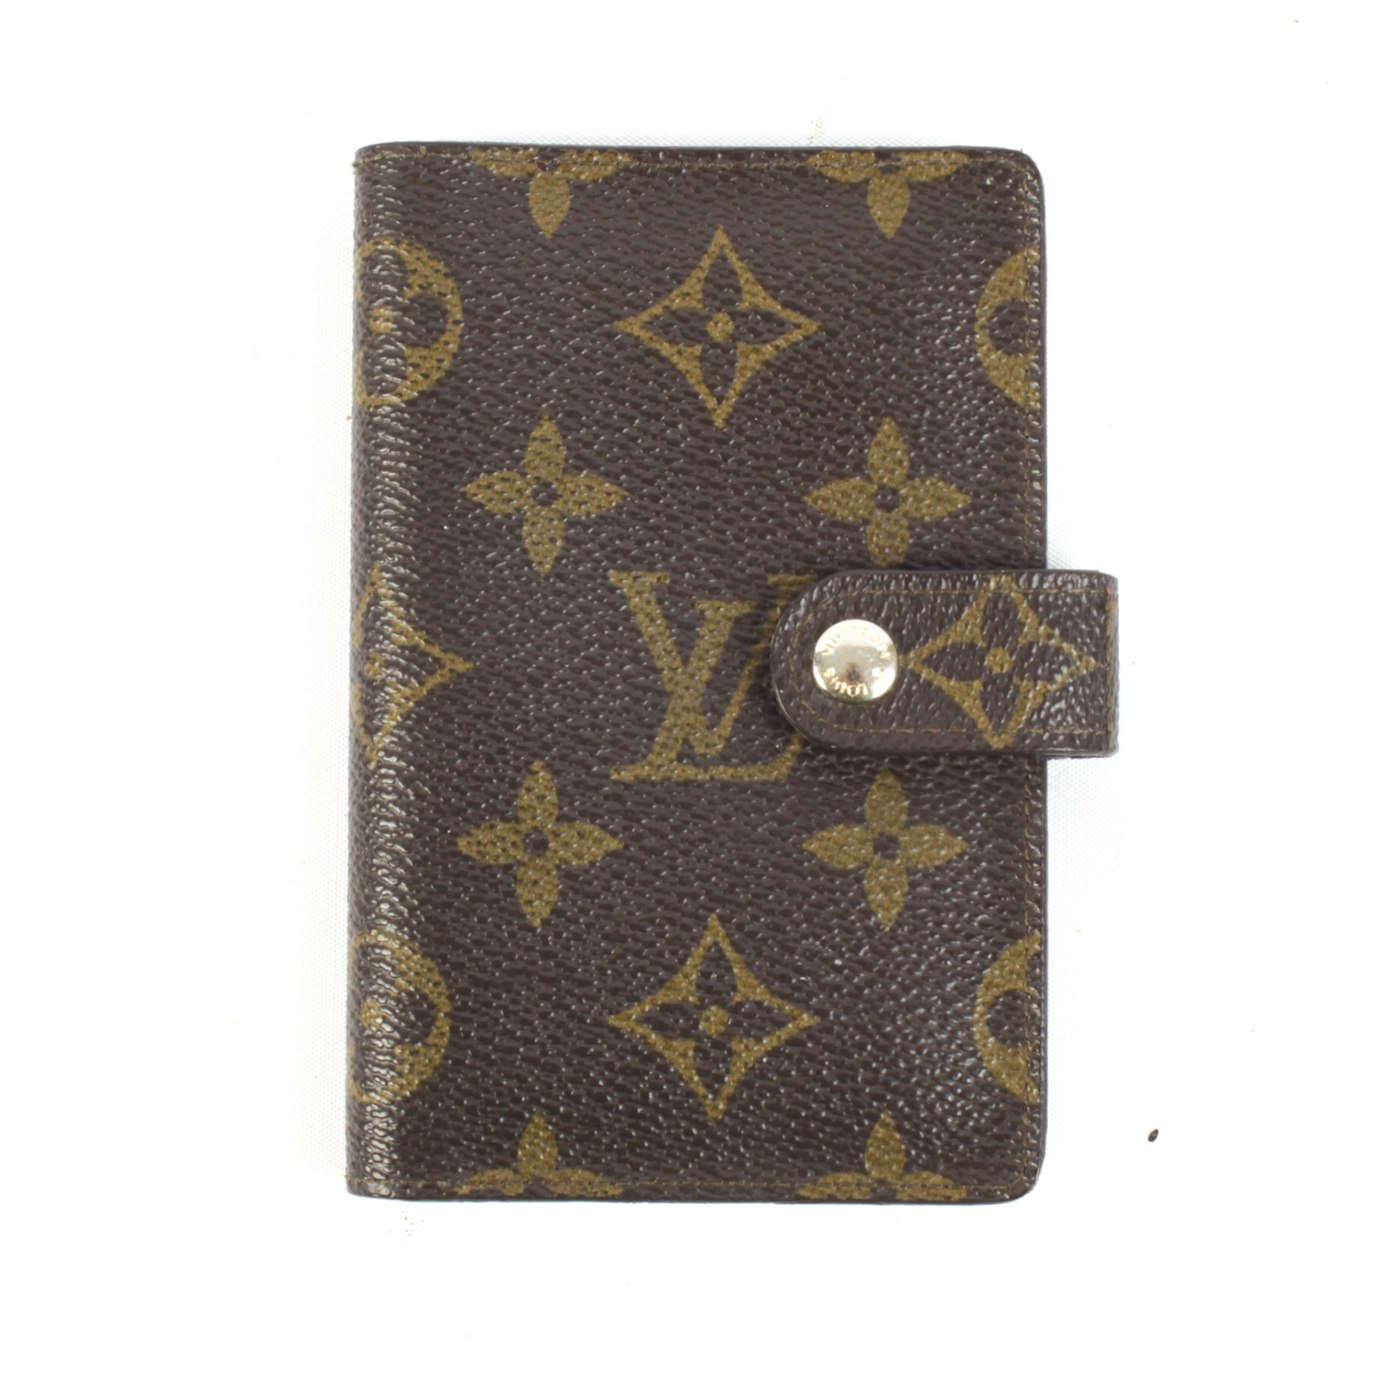 RARE Louis Vuitton VINTAGE leather Trifold wallet / bifold AUTHENTIC